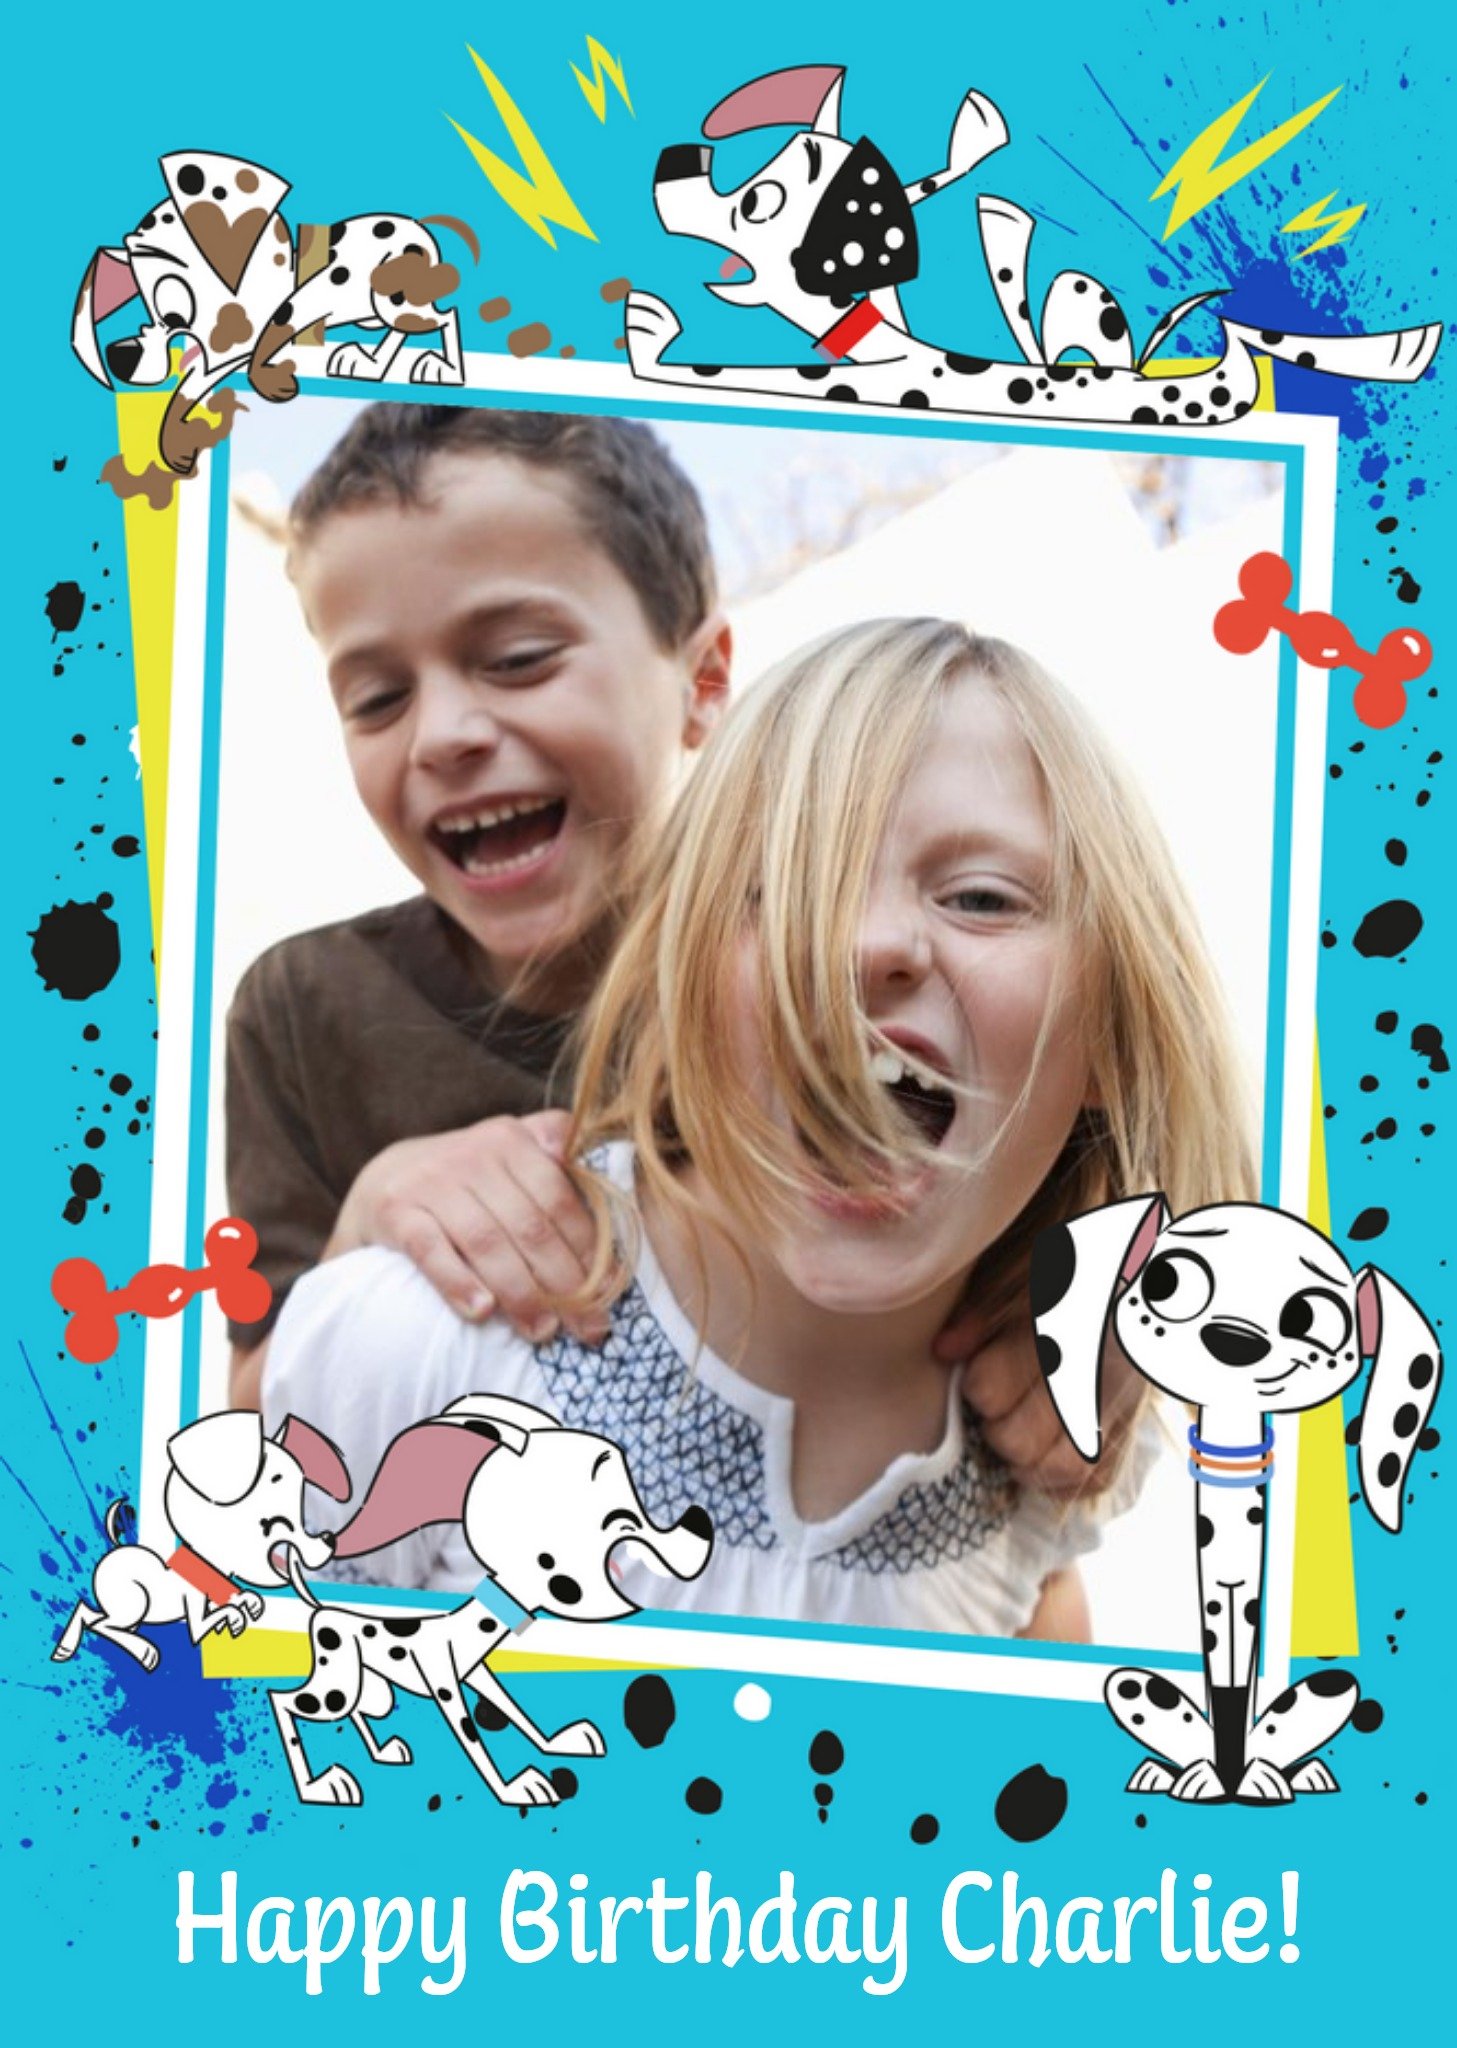 Disney 101 Dalmatian Street Kids Photo Upload Birthday Card, Large